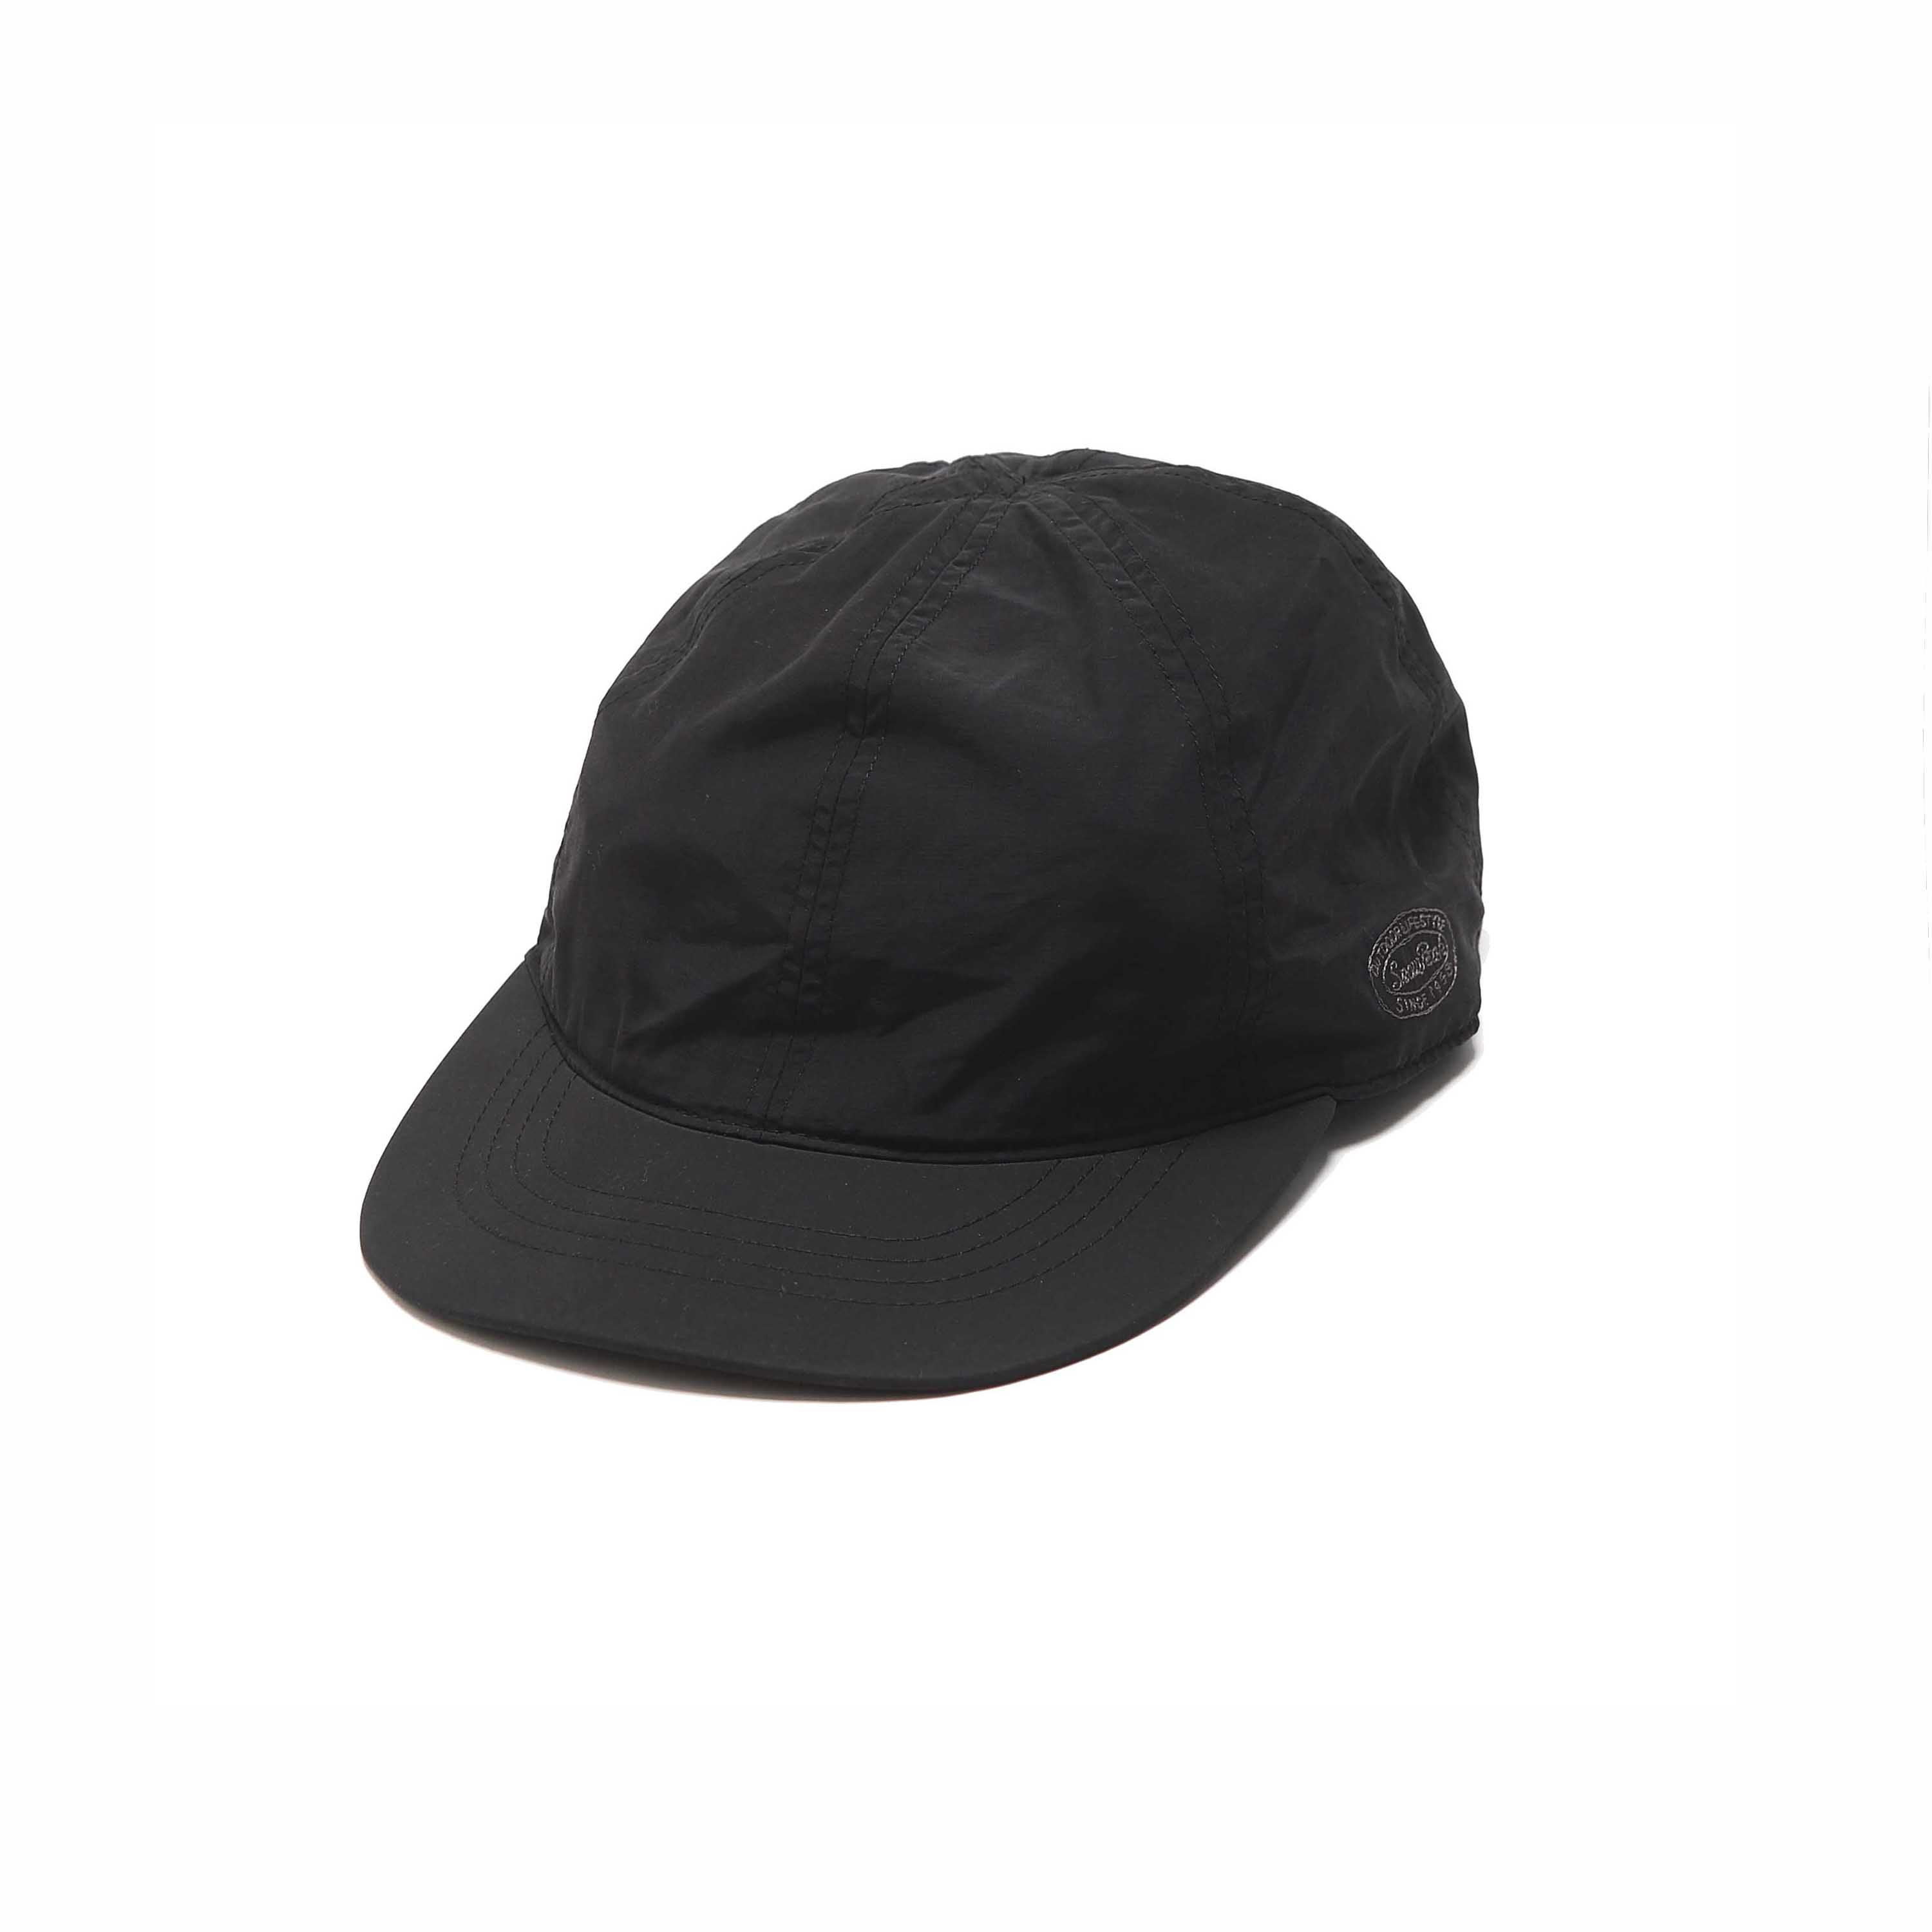 LIGHT MOUNTAIN CLOTH CAP - BLACK